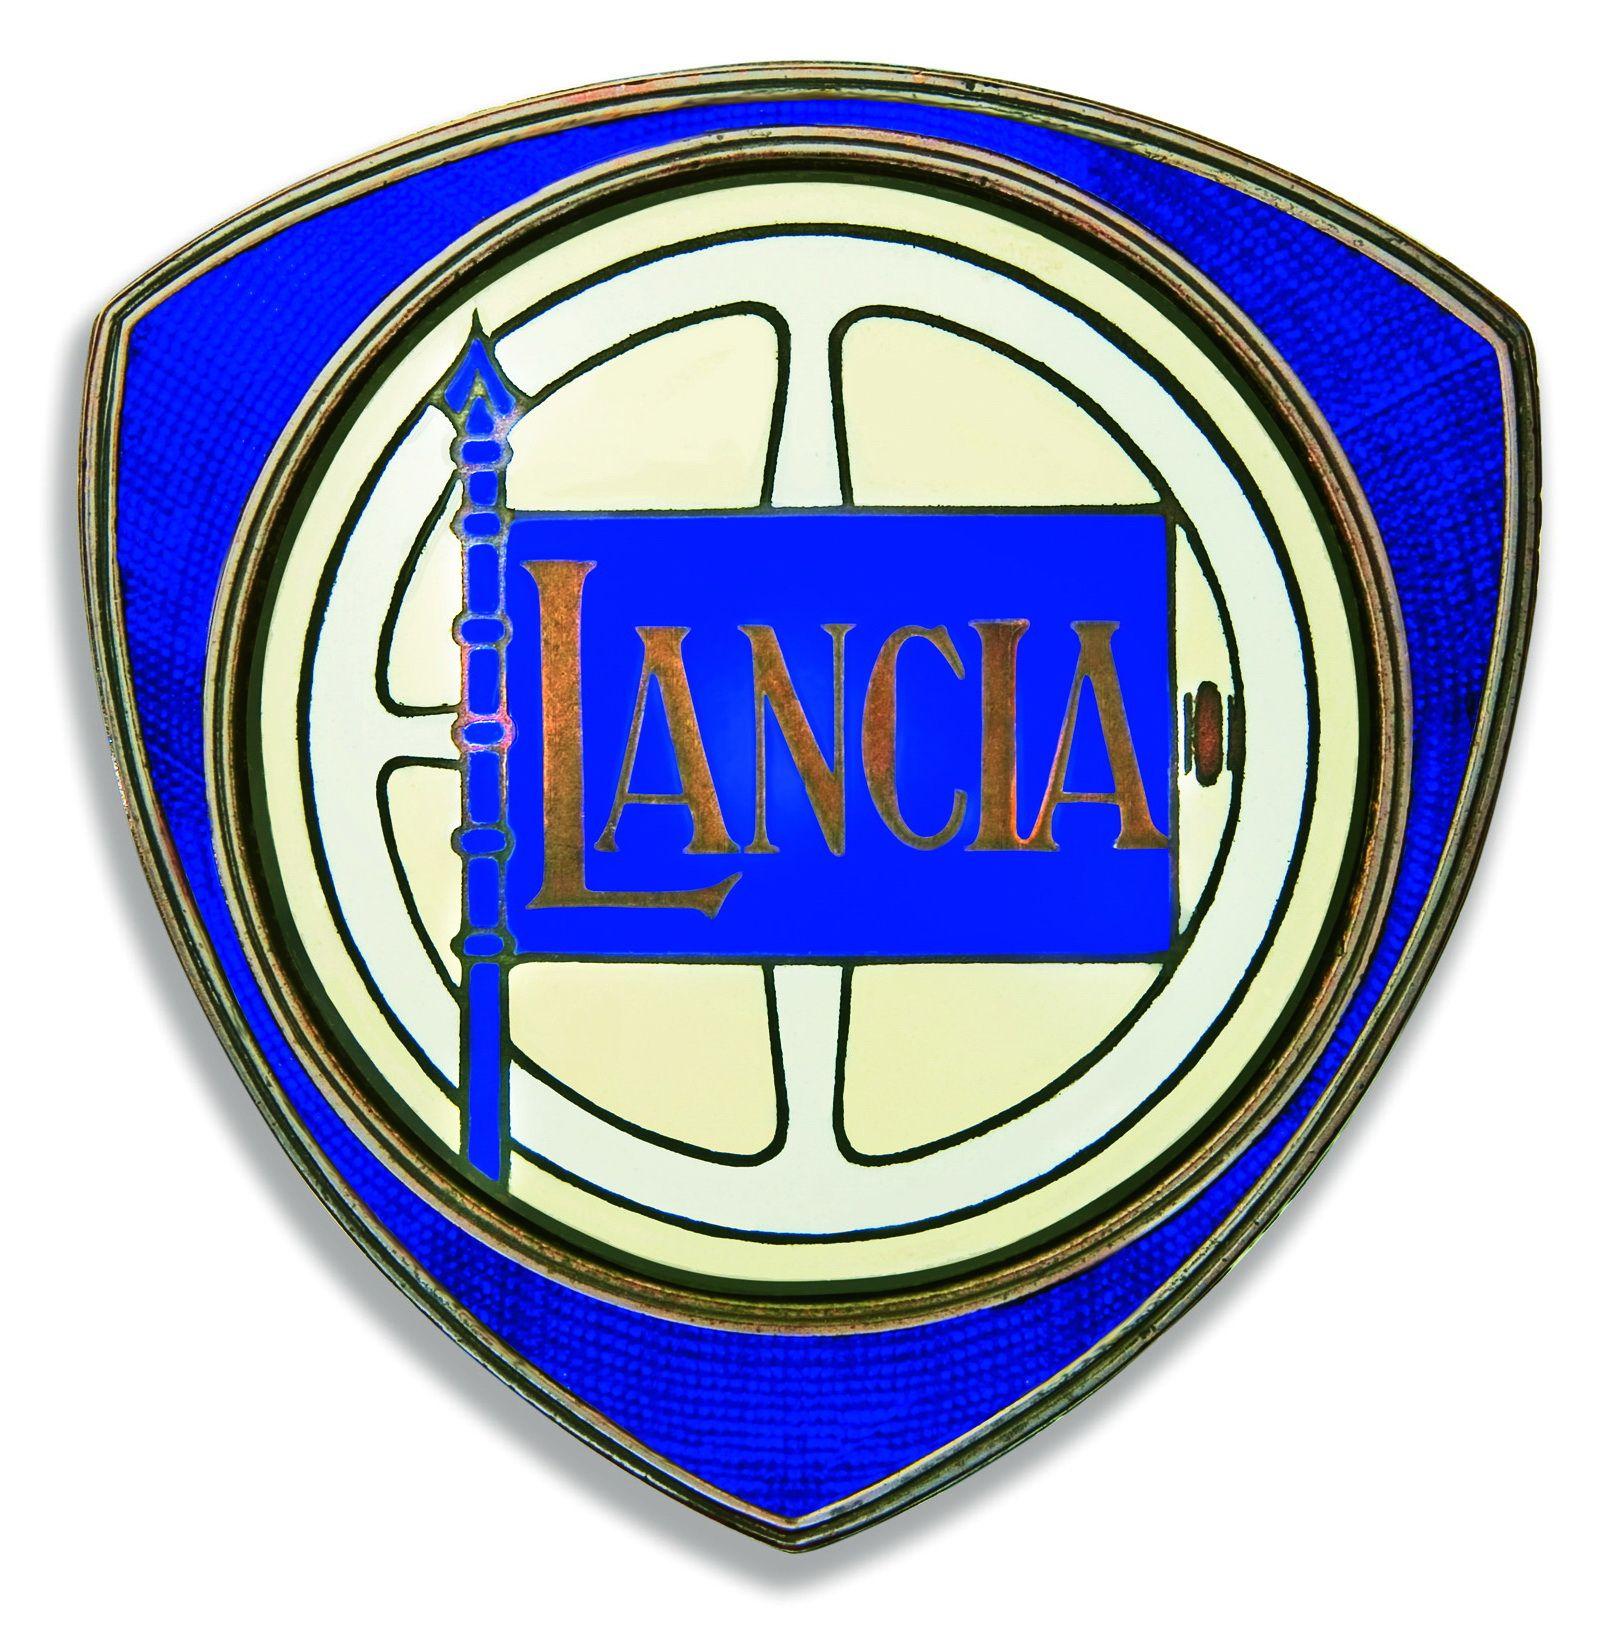 Blue Shield Car Logo - Lancia Logo, Lancia Car Symbol Meaning and History | Car Brand Names.com